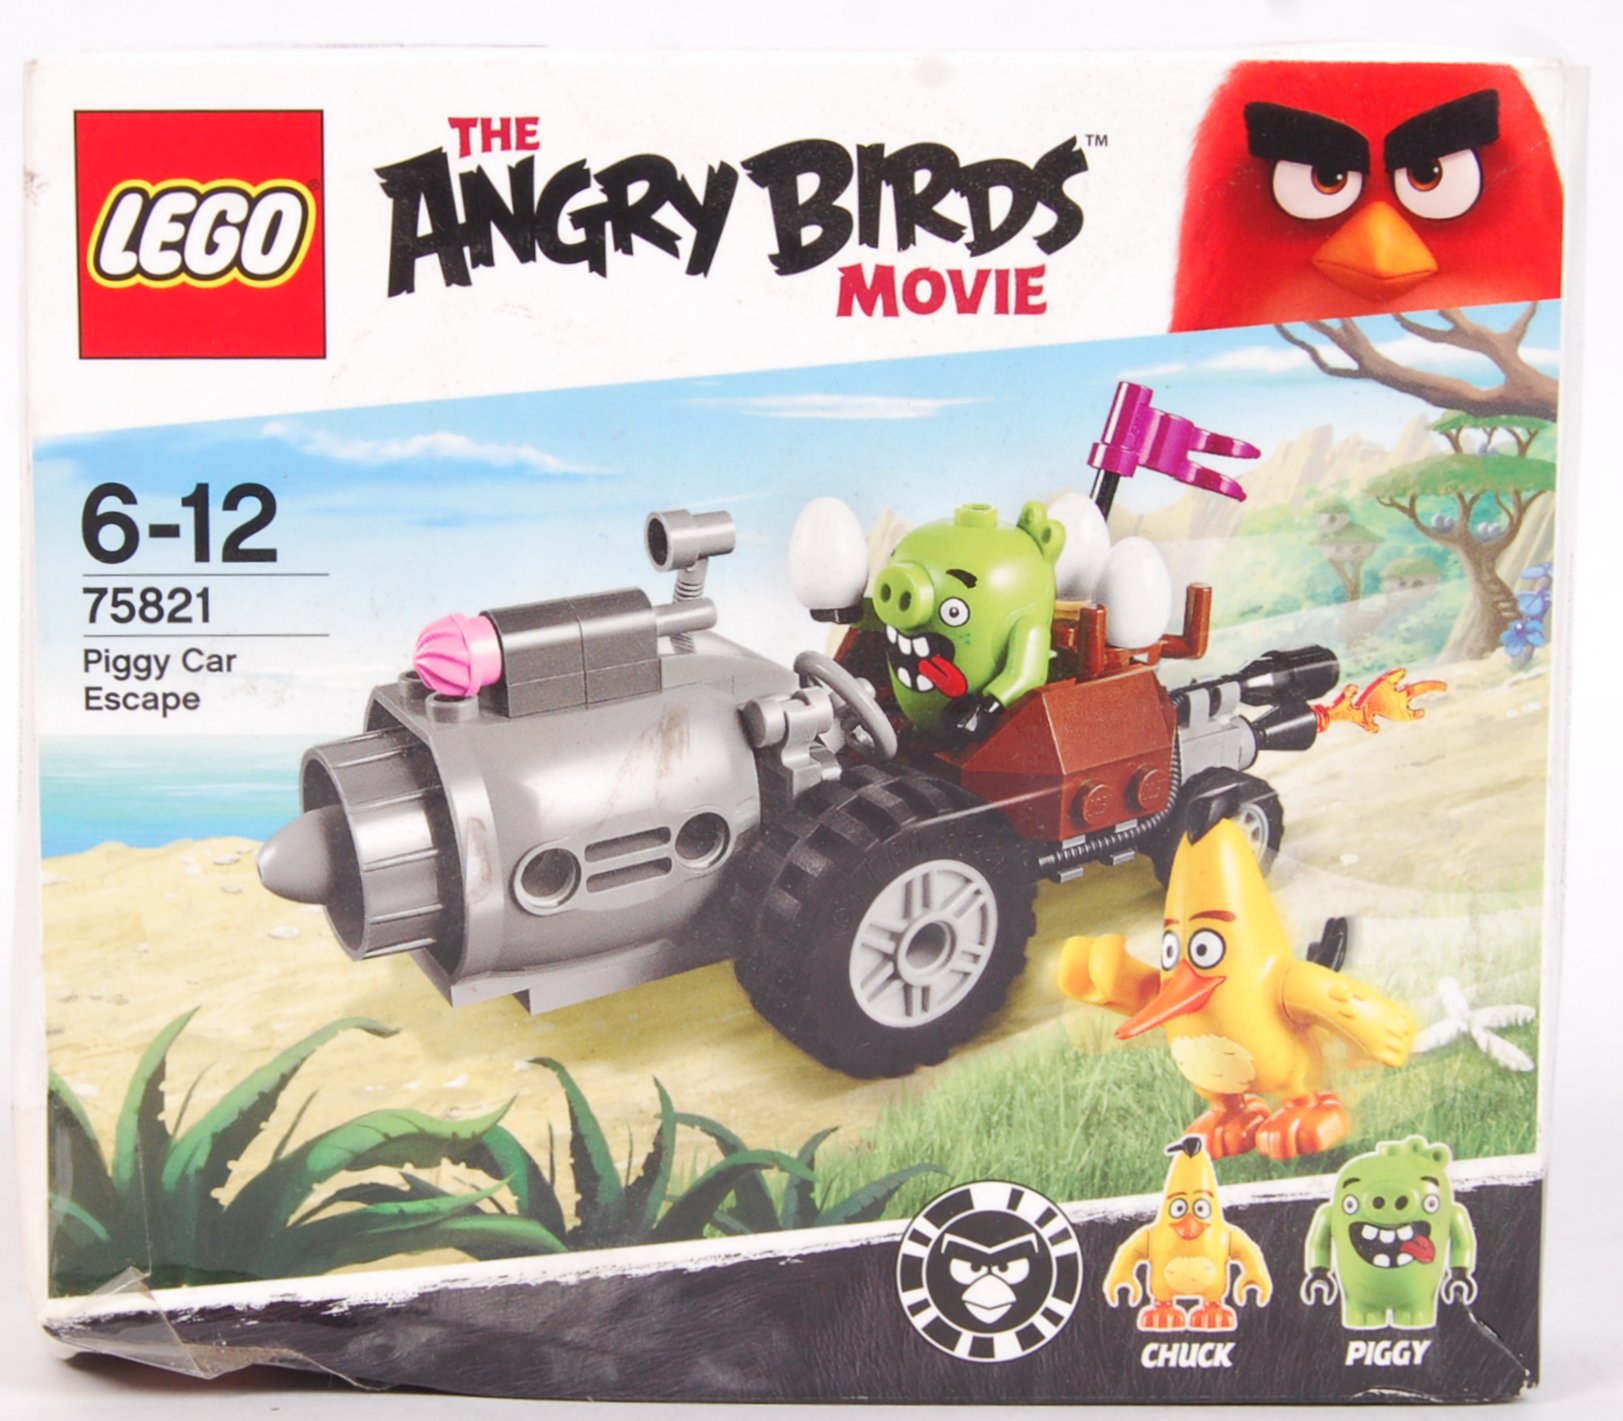 LEGO ANGRY BIRDS 75821 SET